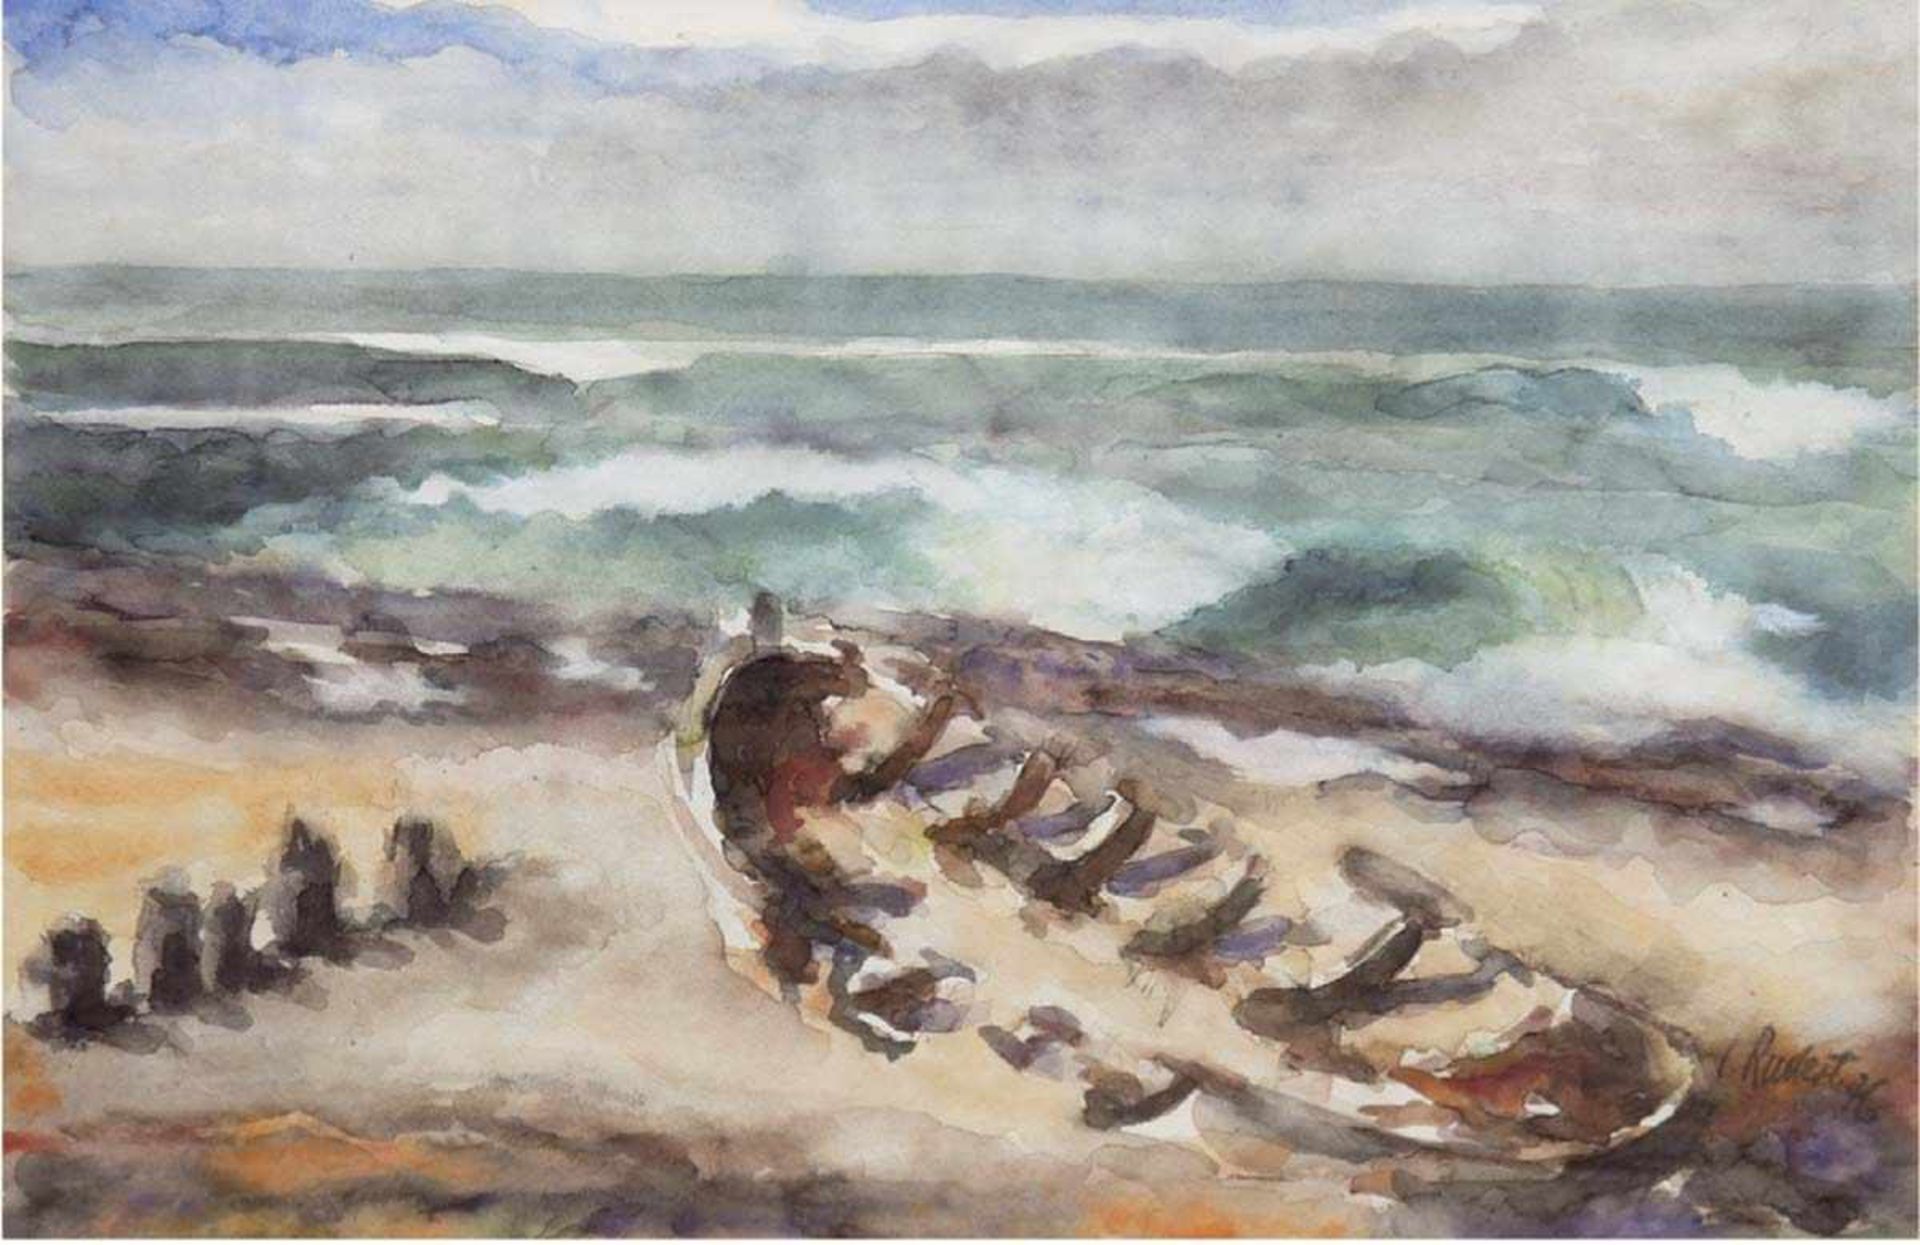 Rudert, Fritz (1899-?) "Bootswrack am Strand", Aquarell, sign. und dat. '76 u.r., 41x61cm, hinter